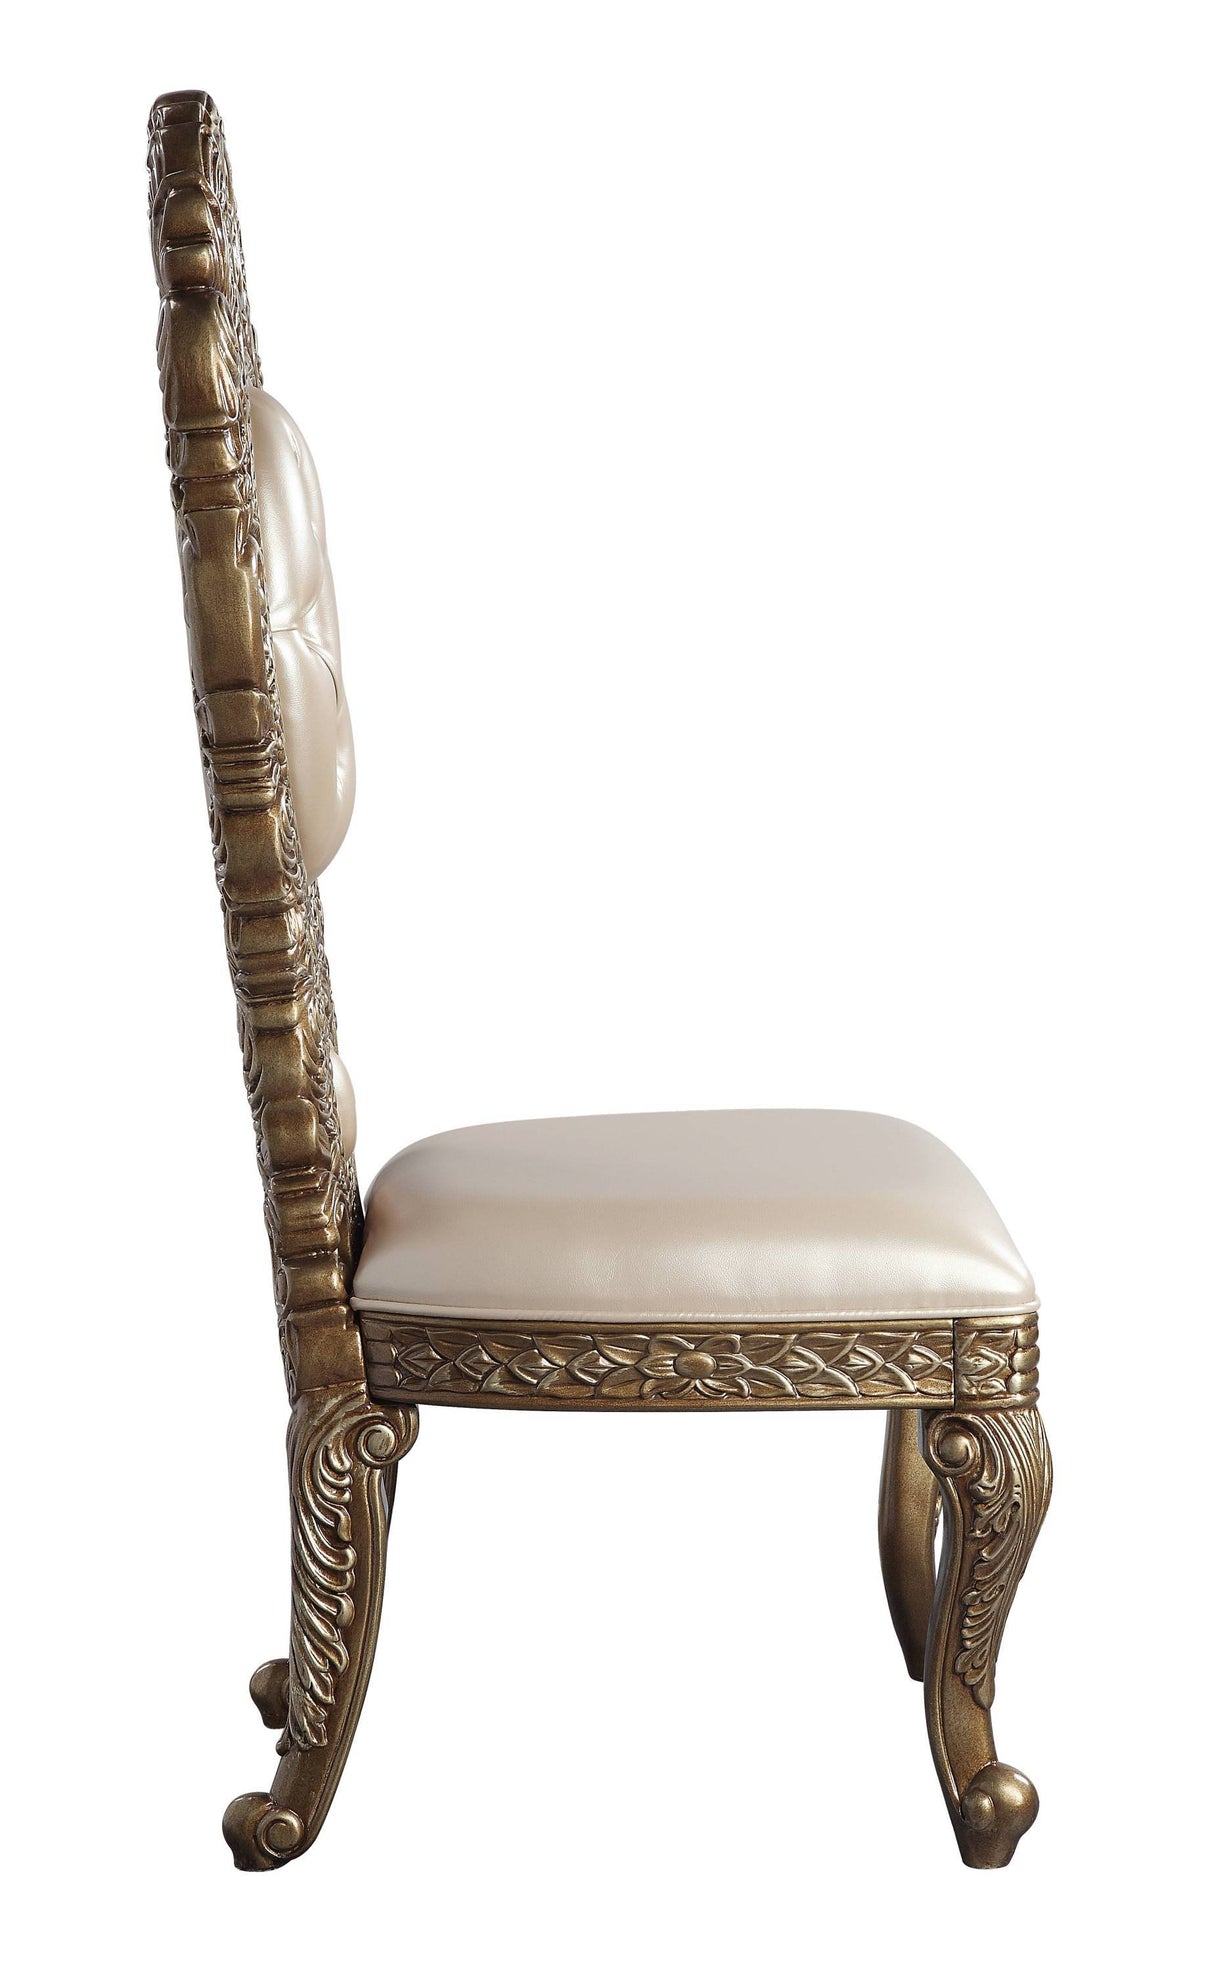 ACME Constantine Side Chair (1Pc/1Ctn), PU, Brown & Gold Finish DN00478 - Home Elegance USA